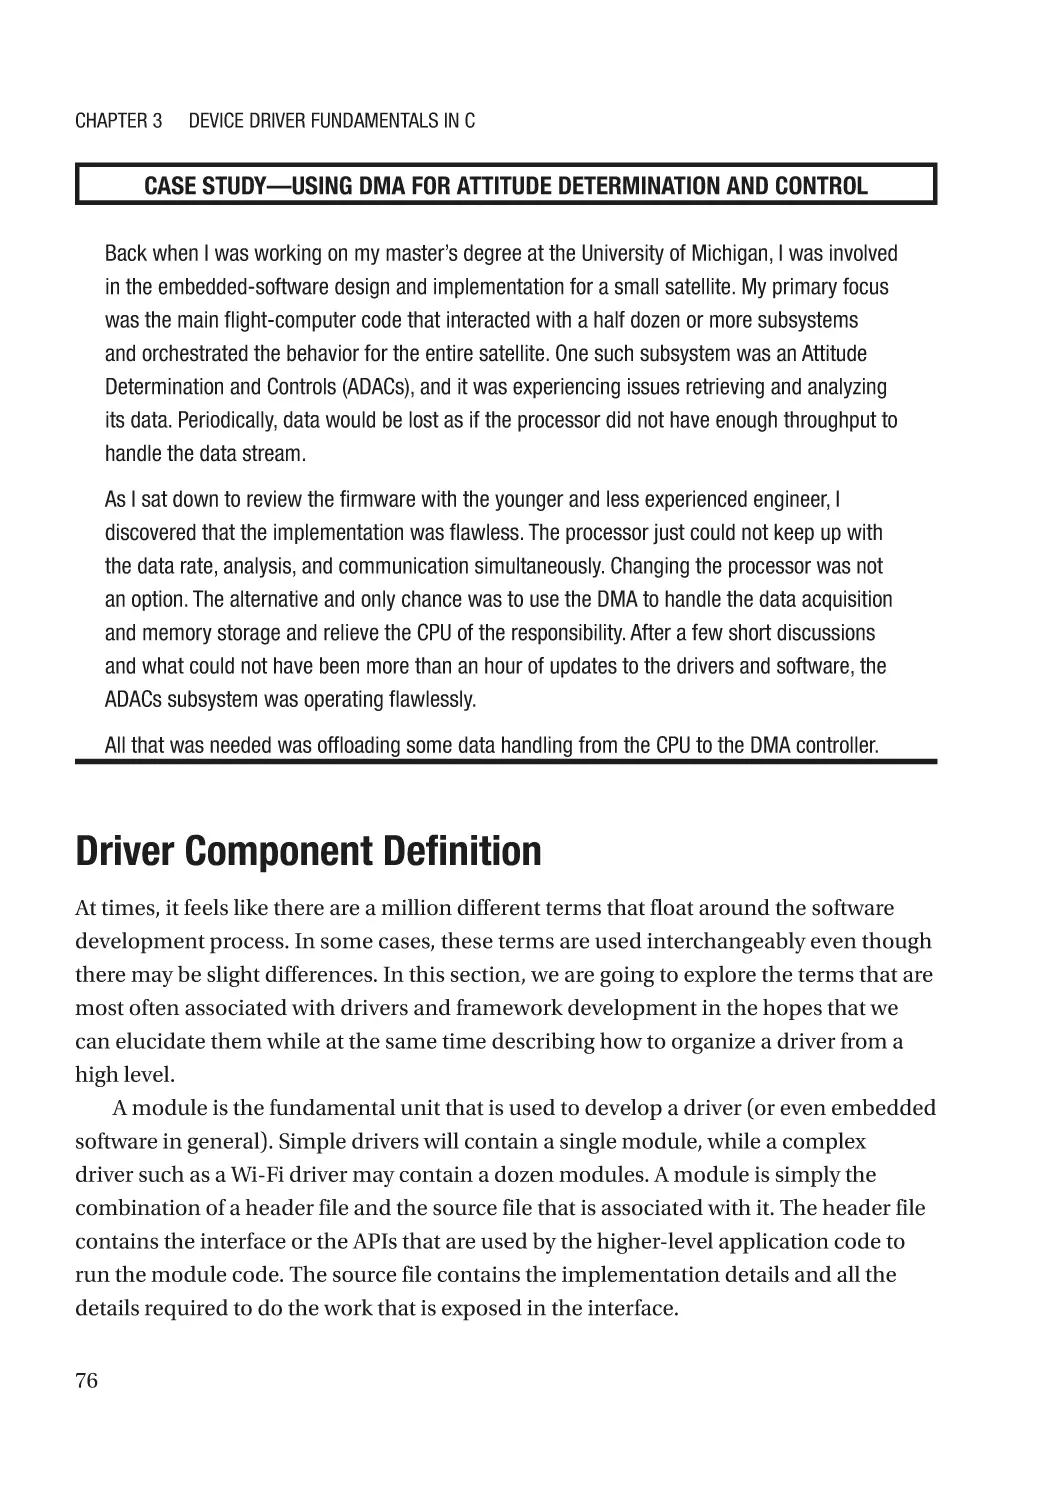 Driver Component Definition